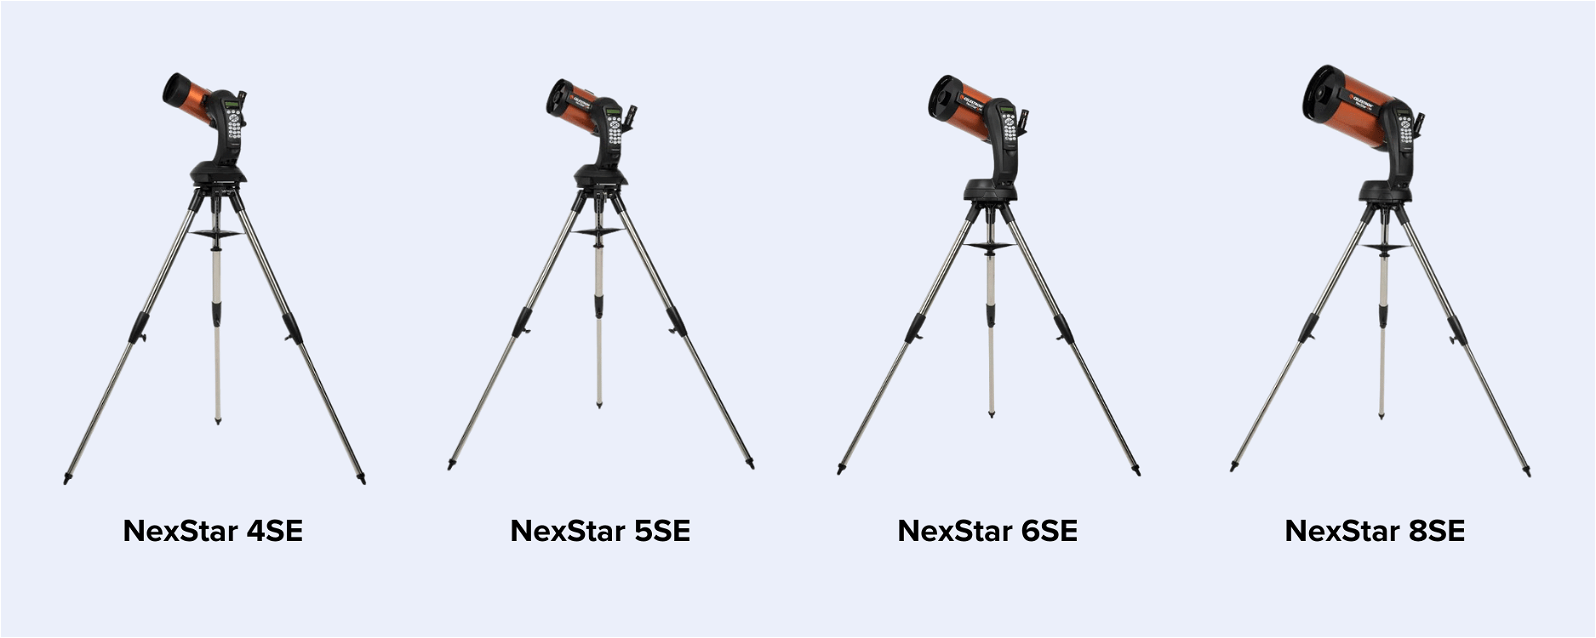 Celestron Nexstar SE series scopes named 4SE, 5SE, 6SE and 8SE